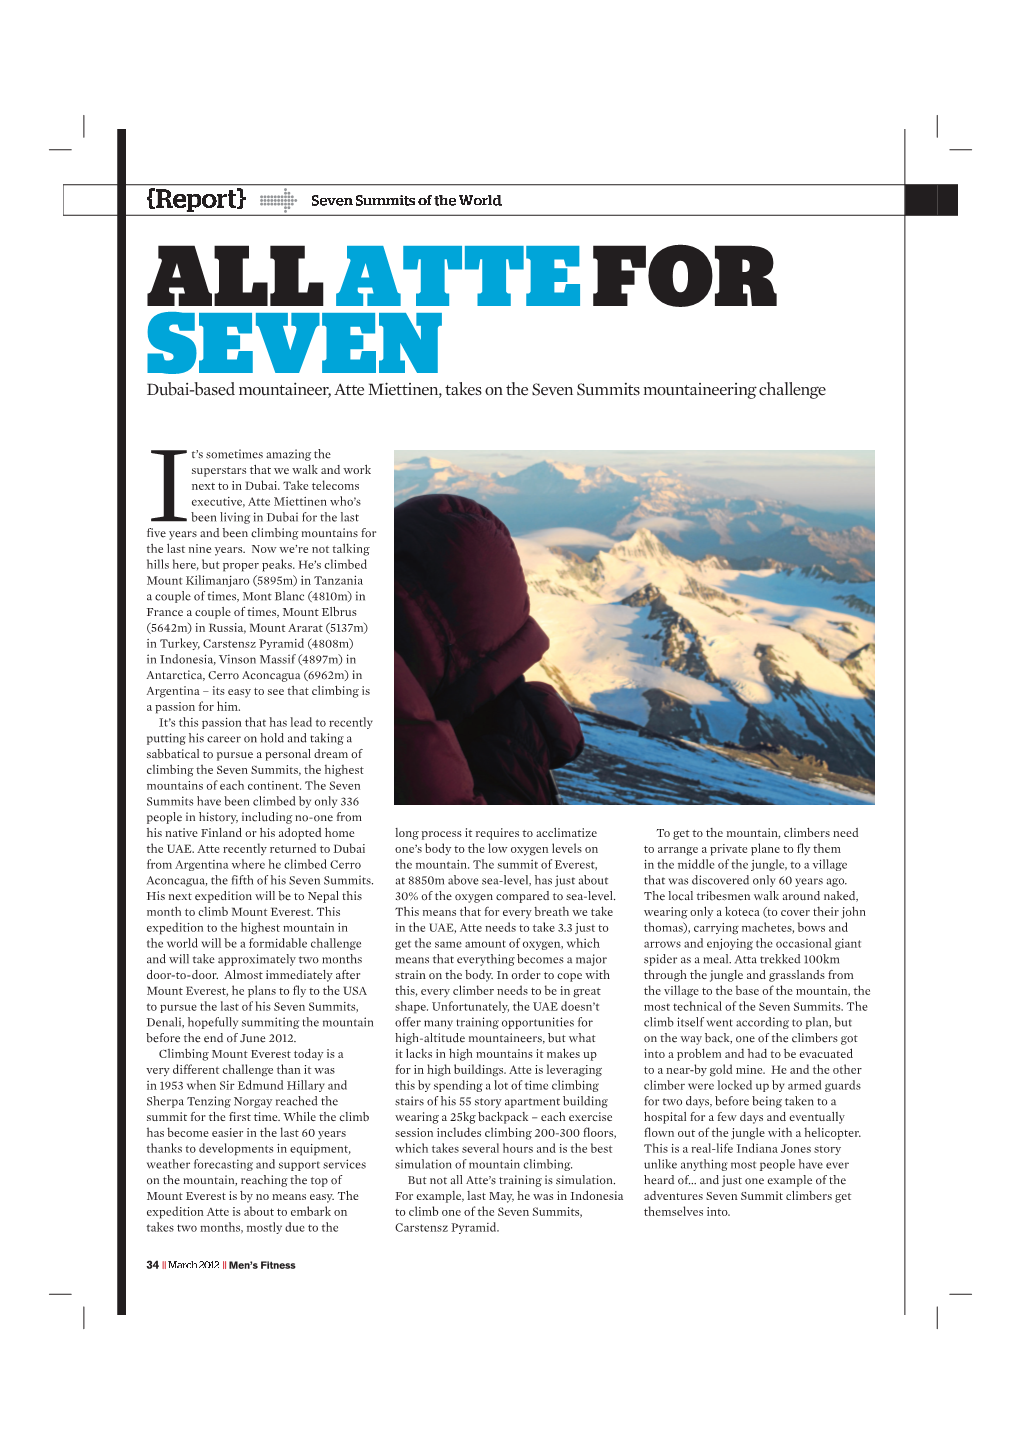 Dubai-Based Mountaineer, Atte Miettinen, Takes on the Seven Summits Mountaineering Challenge